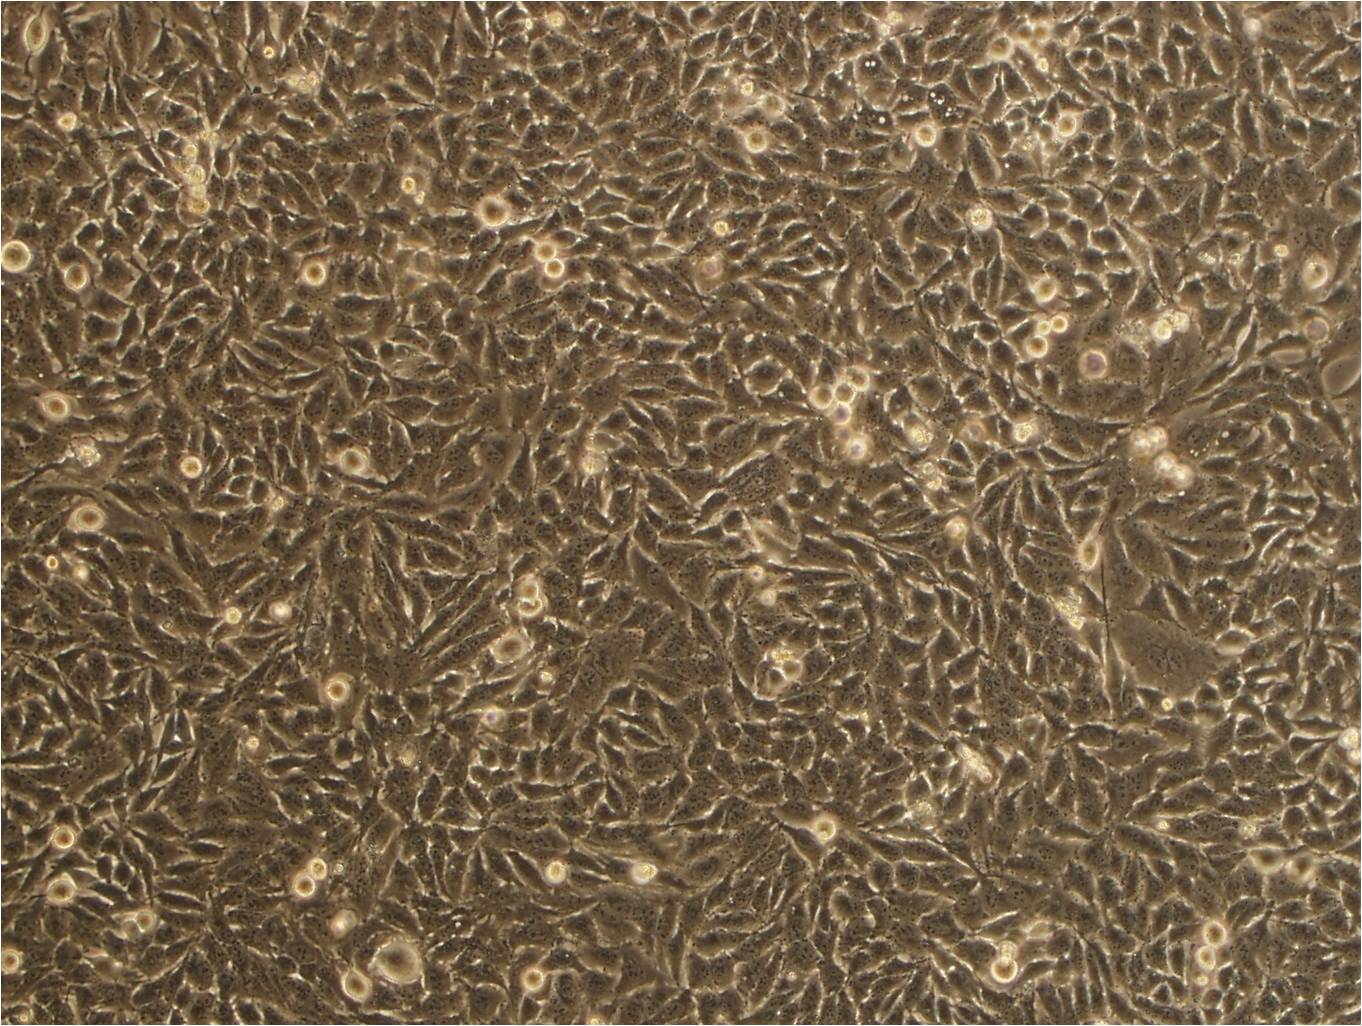 MM96L Adherent人黑色素瘤细胞系